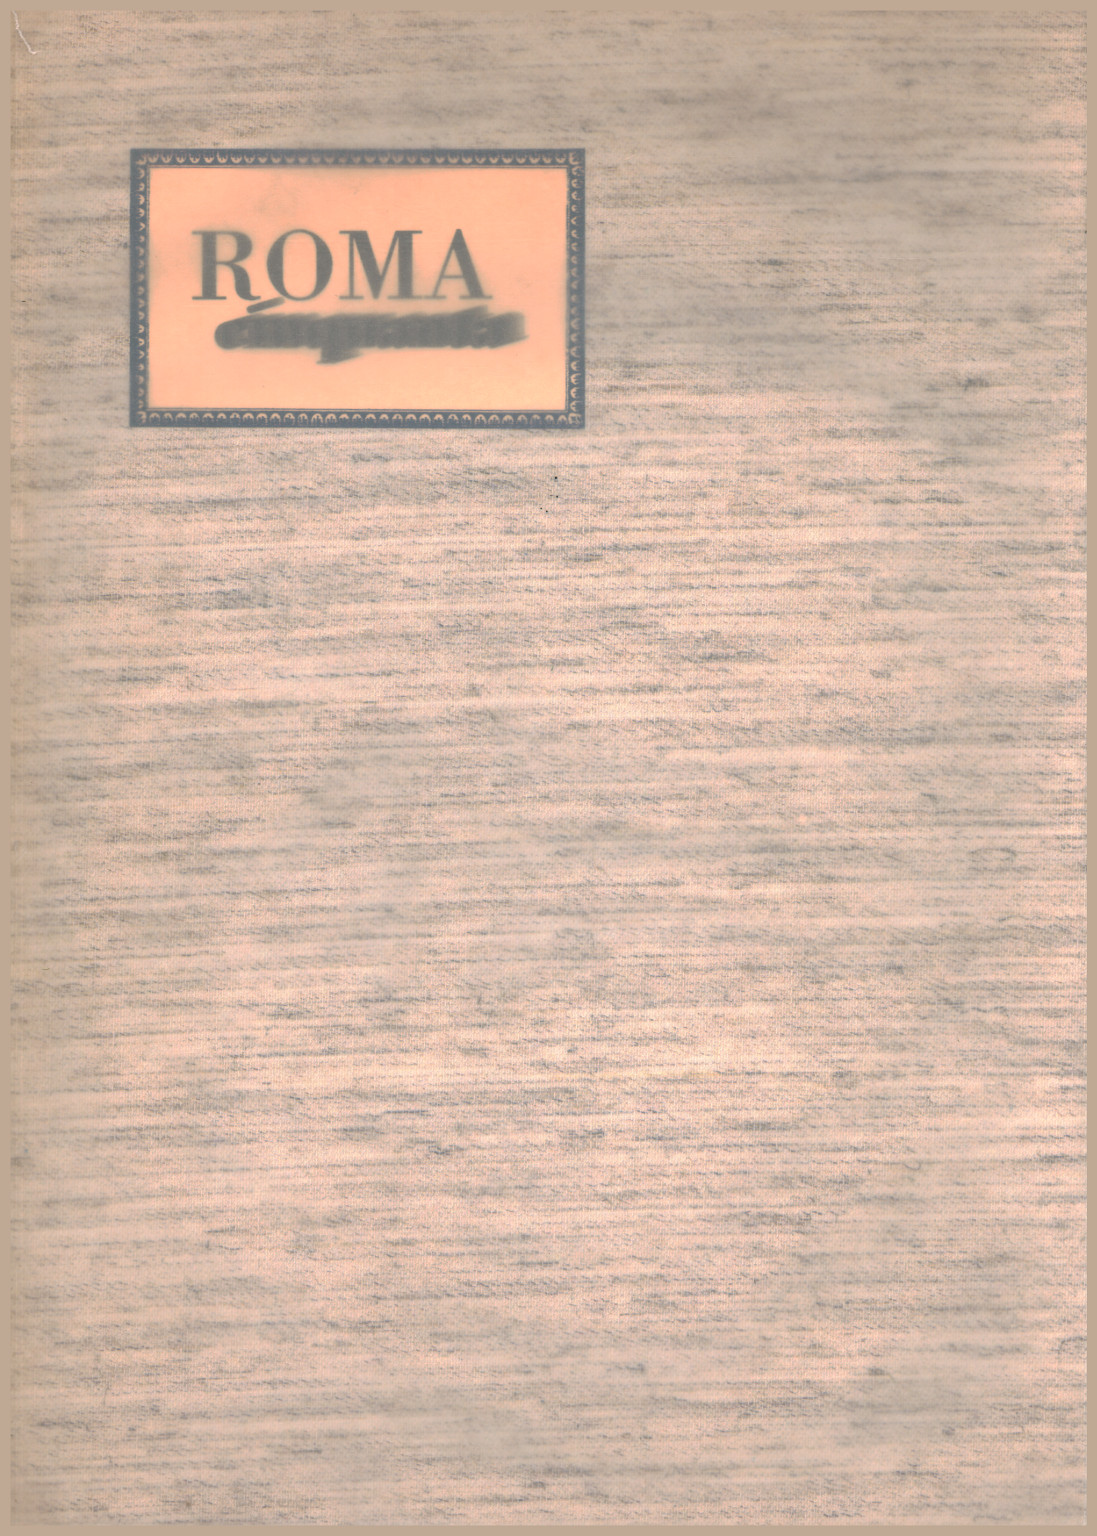 Roma cinquanta, s.a.